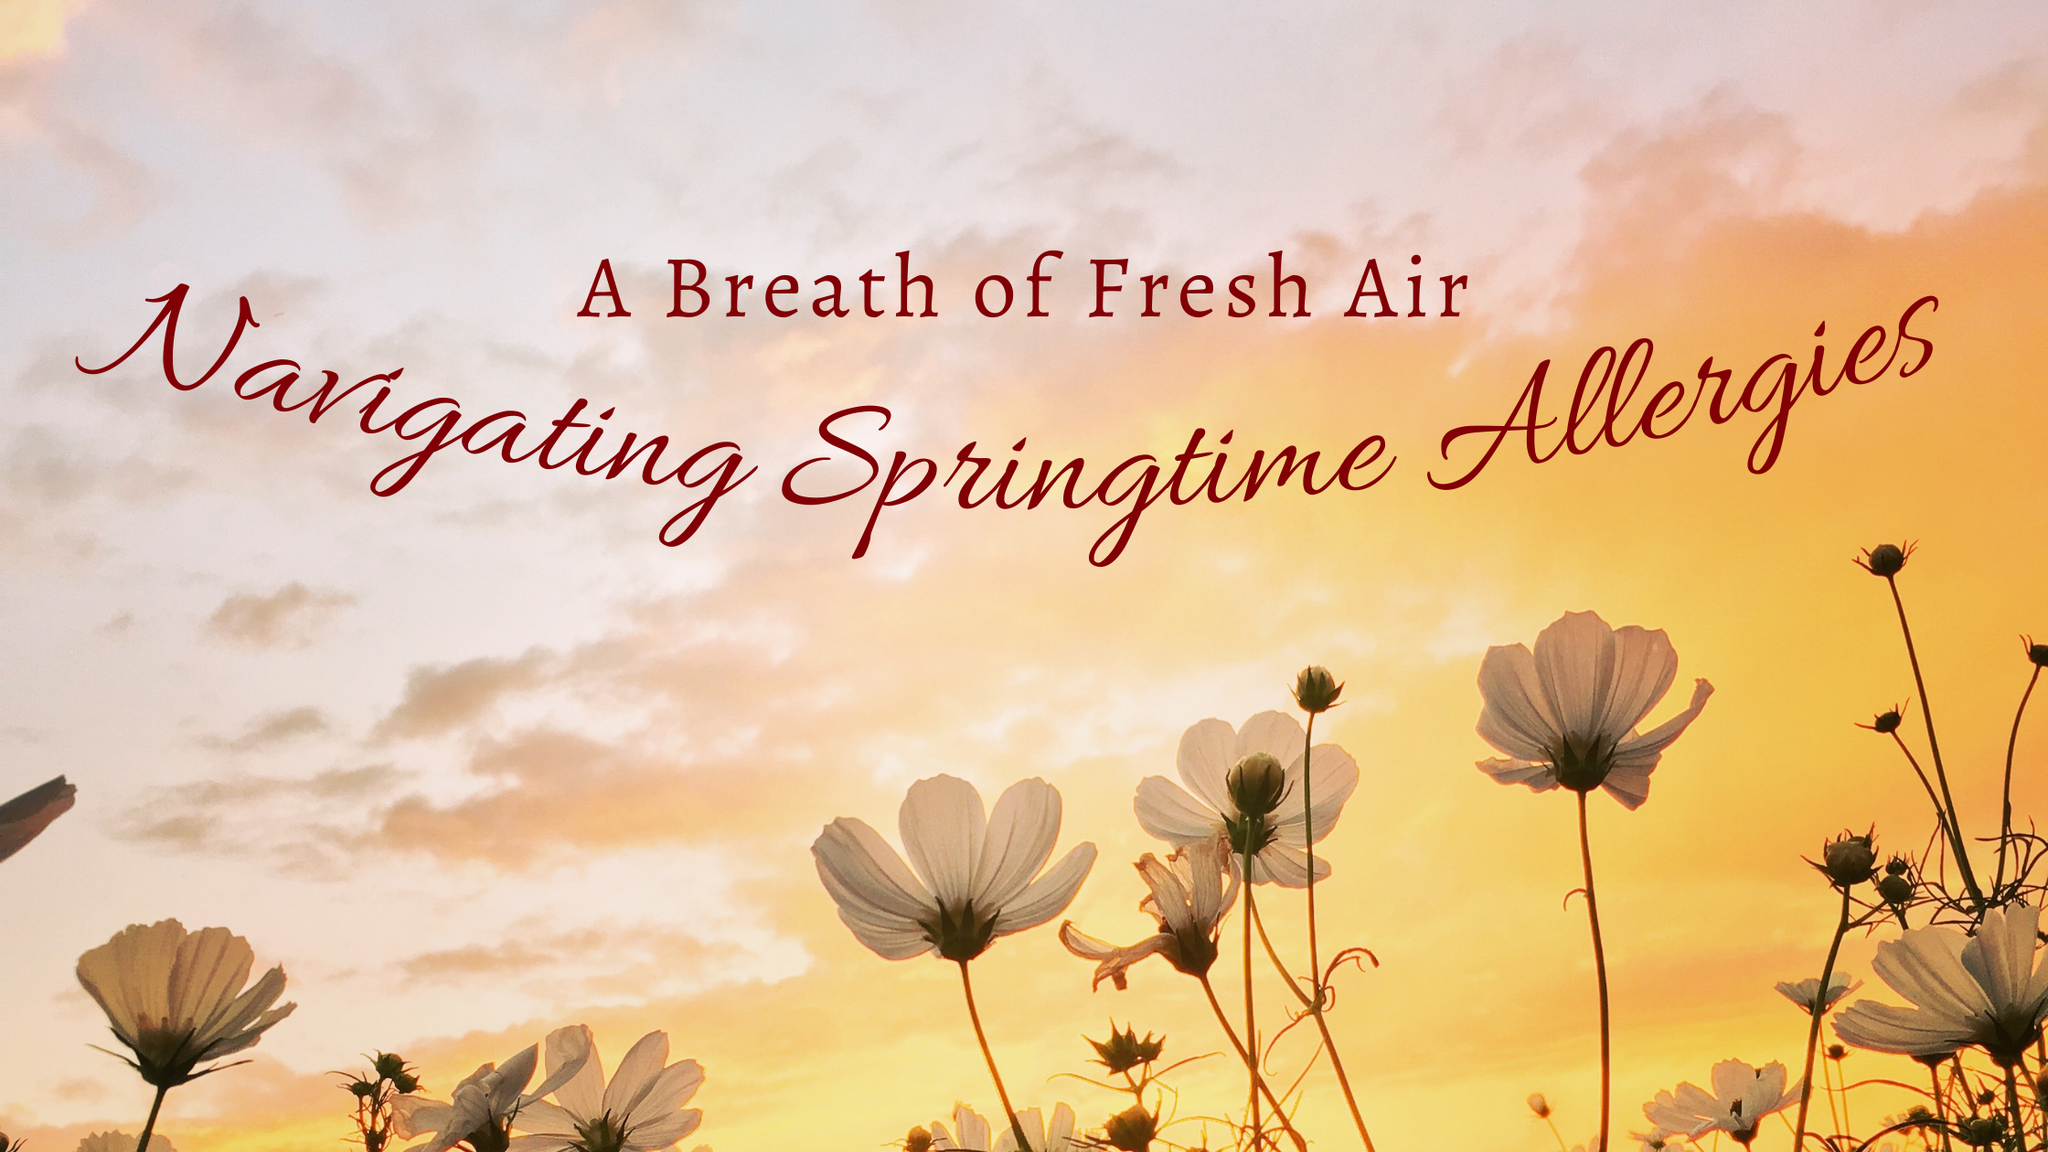 A Breath of Fresh Air: Navigating Springtime Allergies